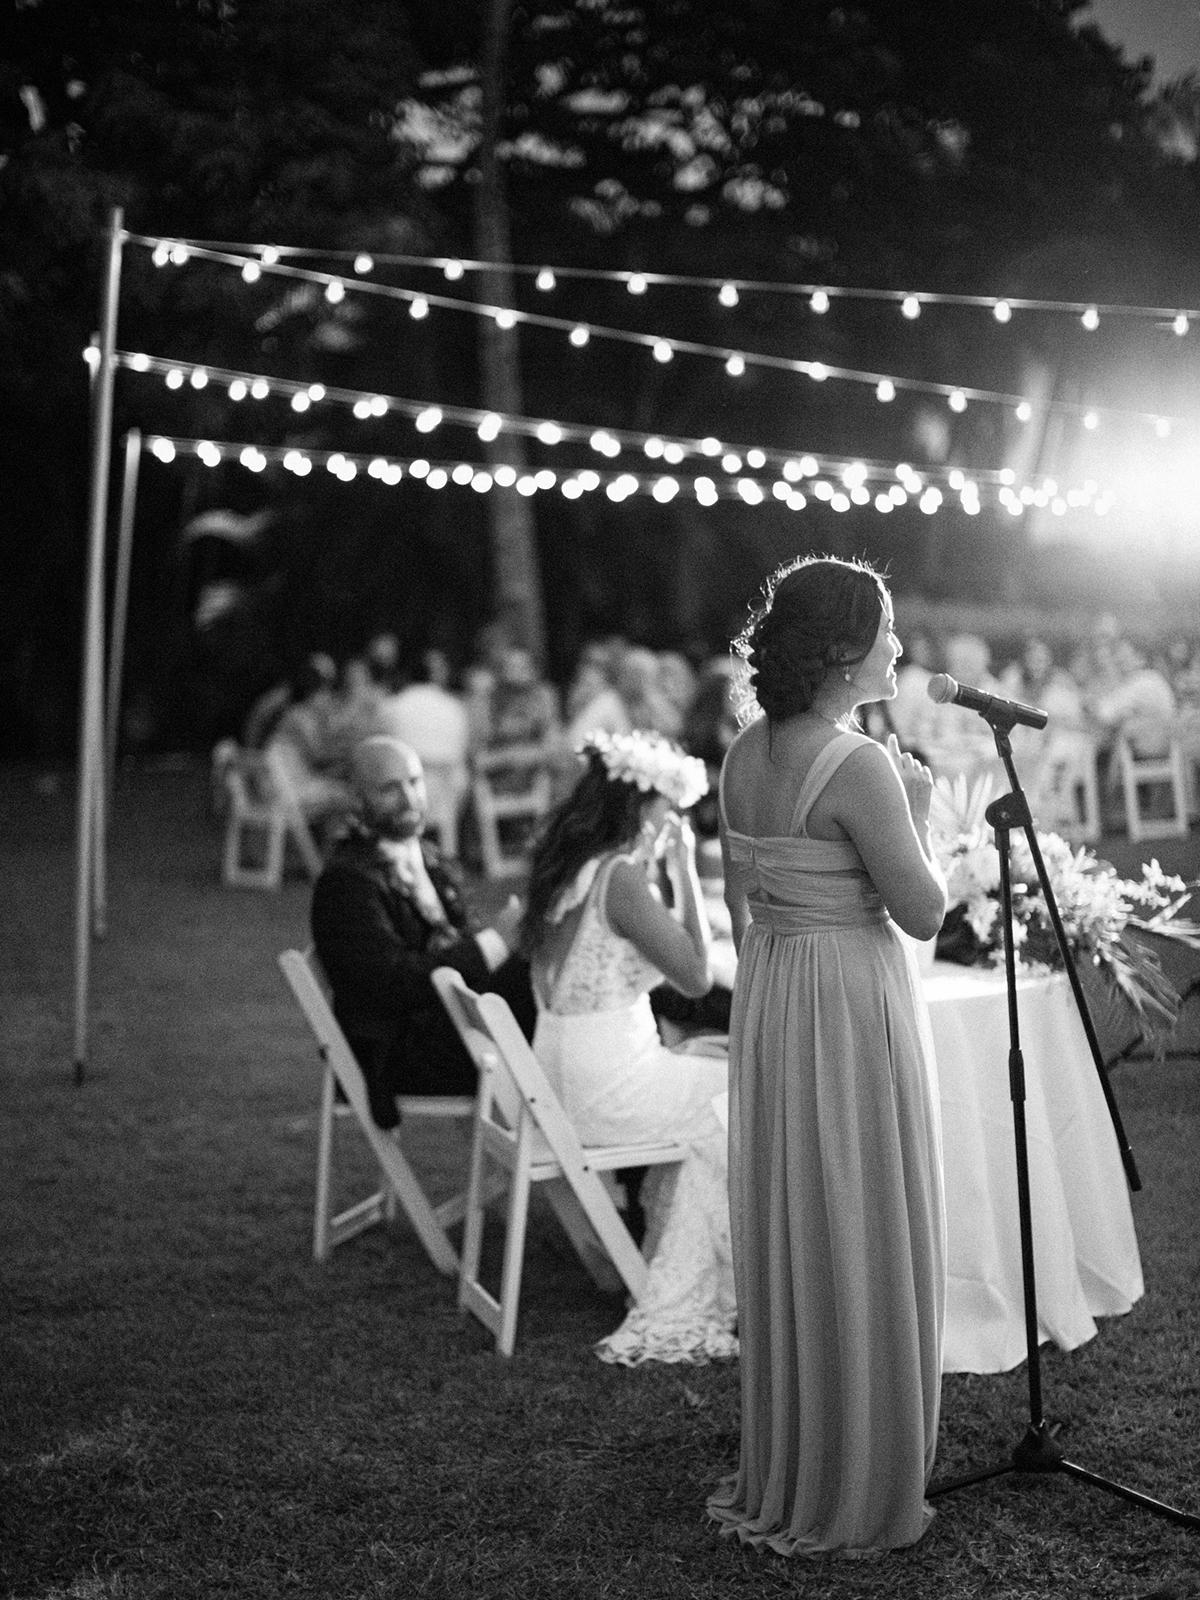 Vibrant Oahu wedding at Kualoa Ranch by Laura Ivanova Photography